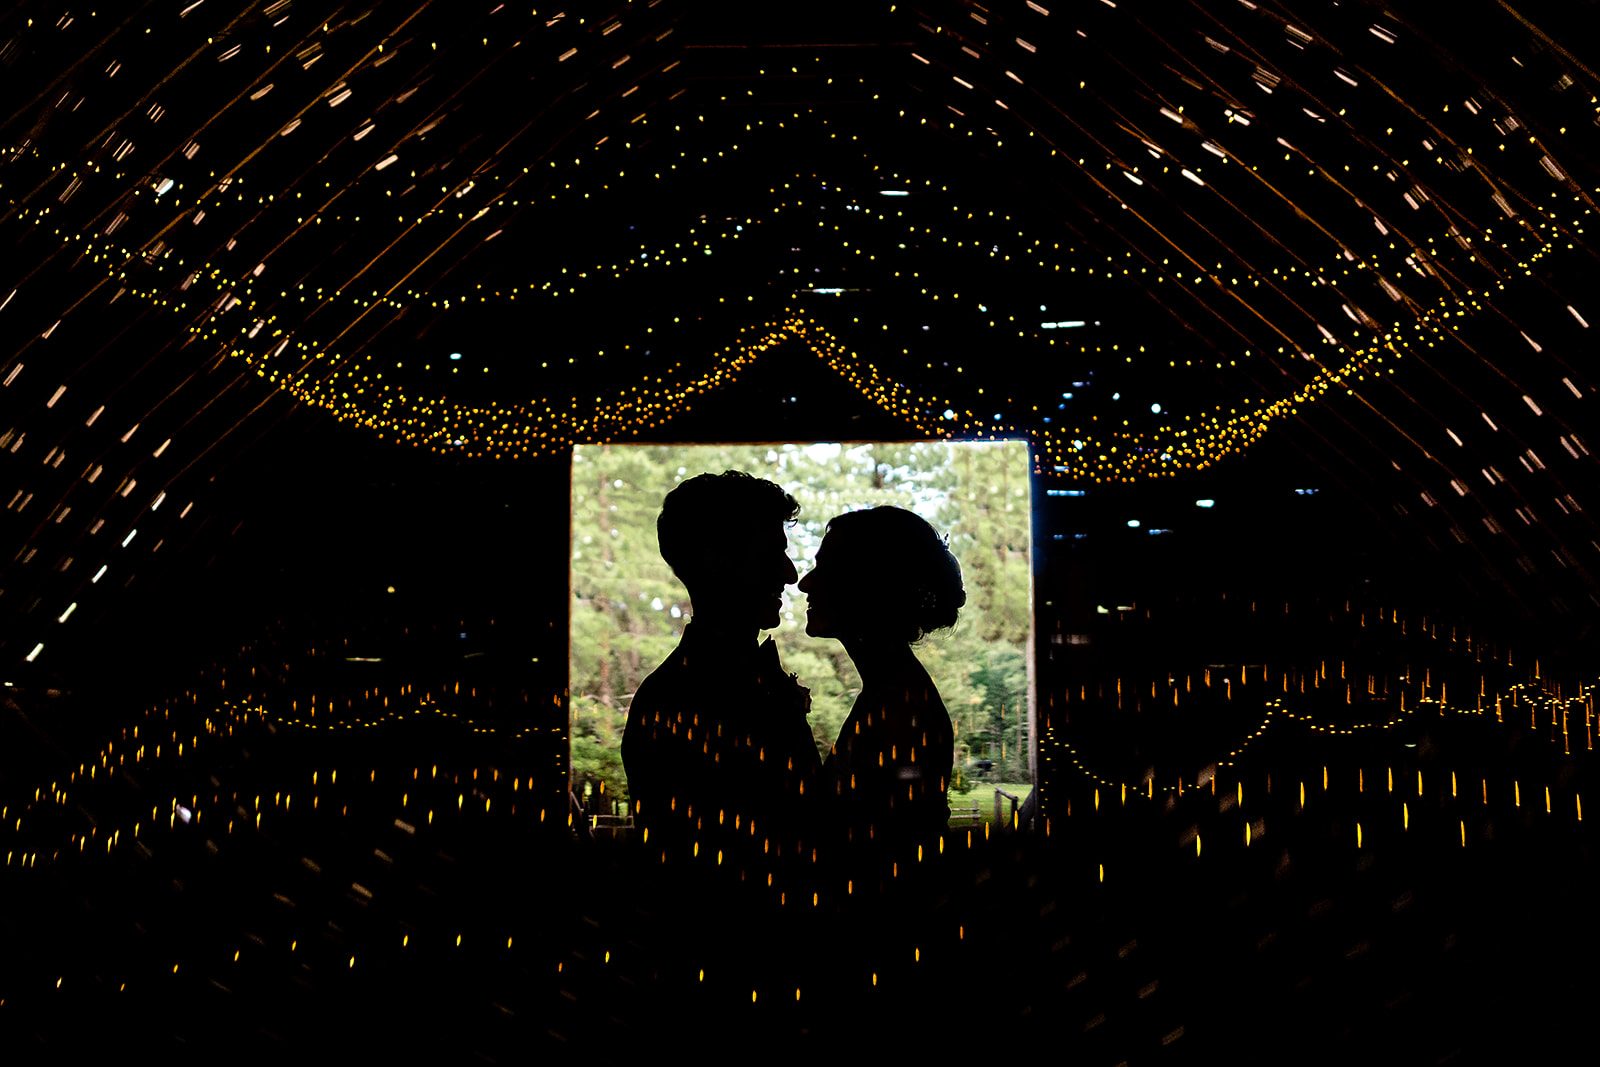 Mazama Ranch House Wedding barn portraits with string lights